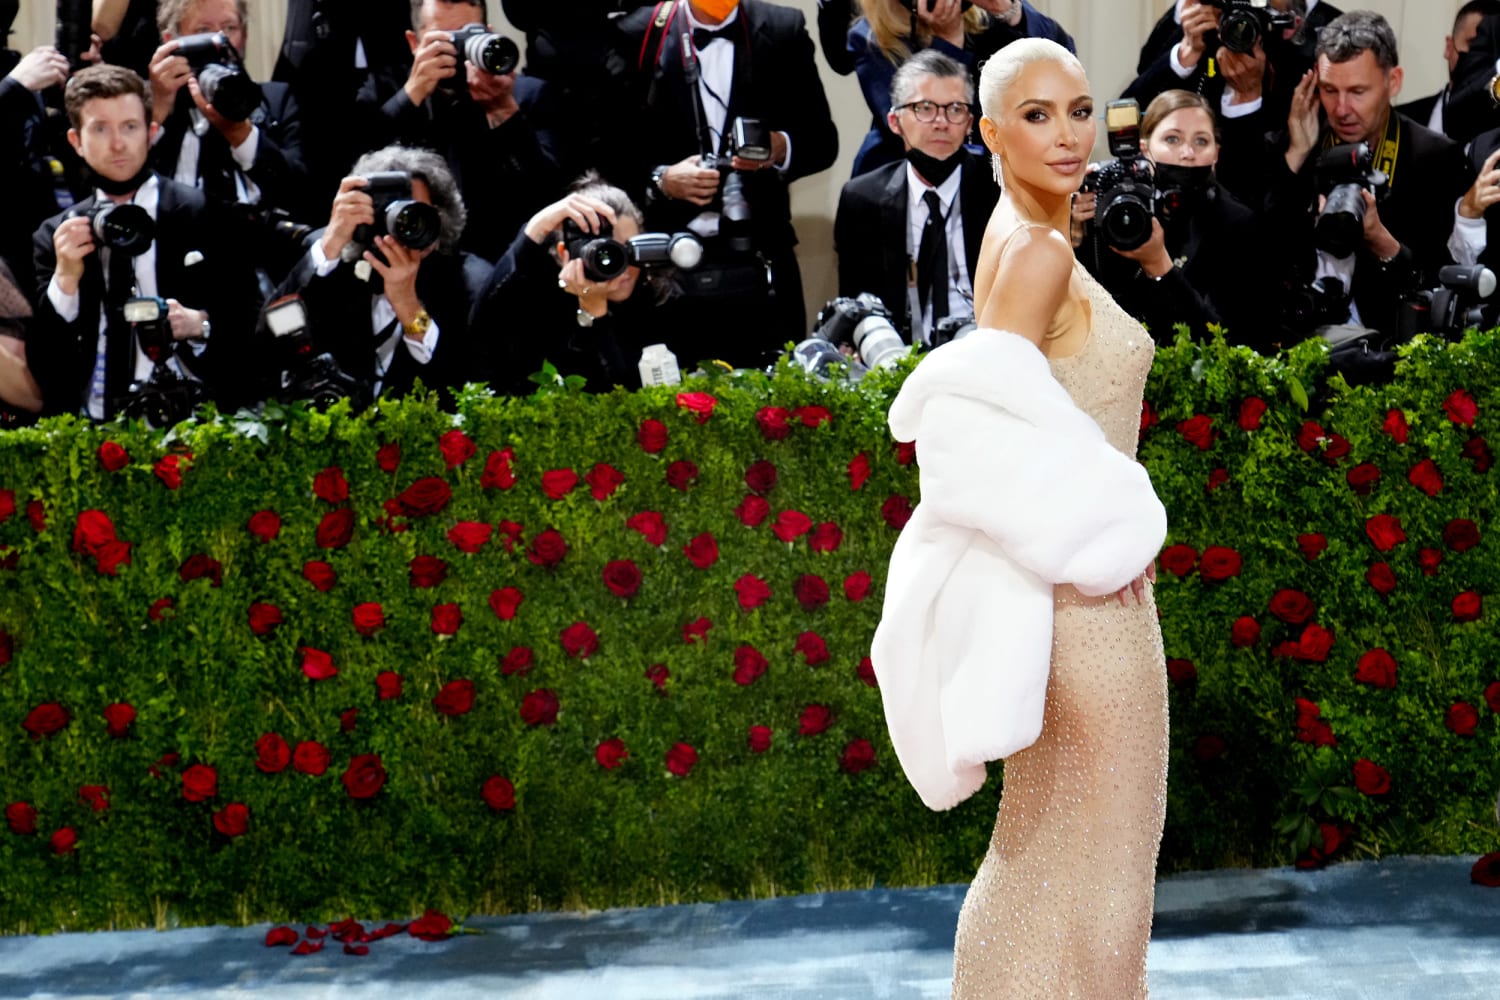 Kim Kardashian changed into a second Marilyn Monroe dress after